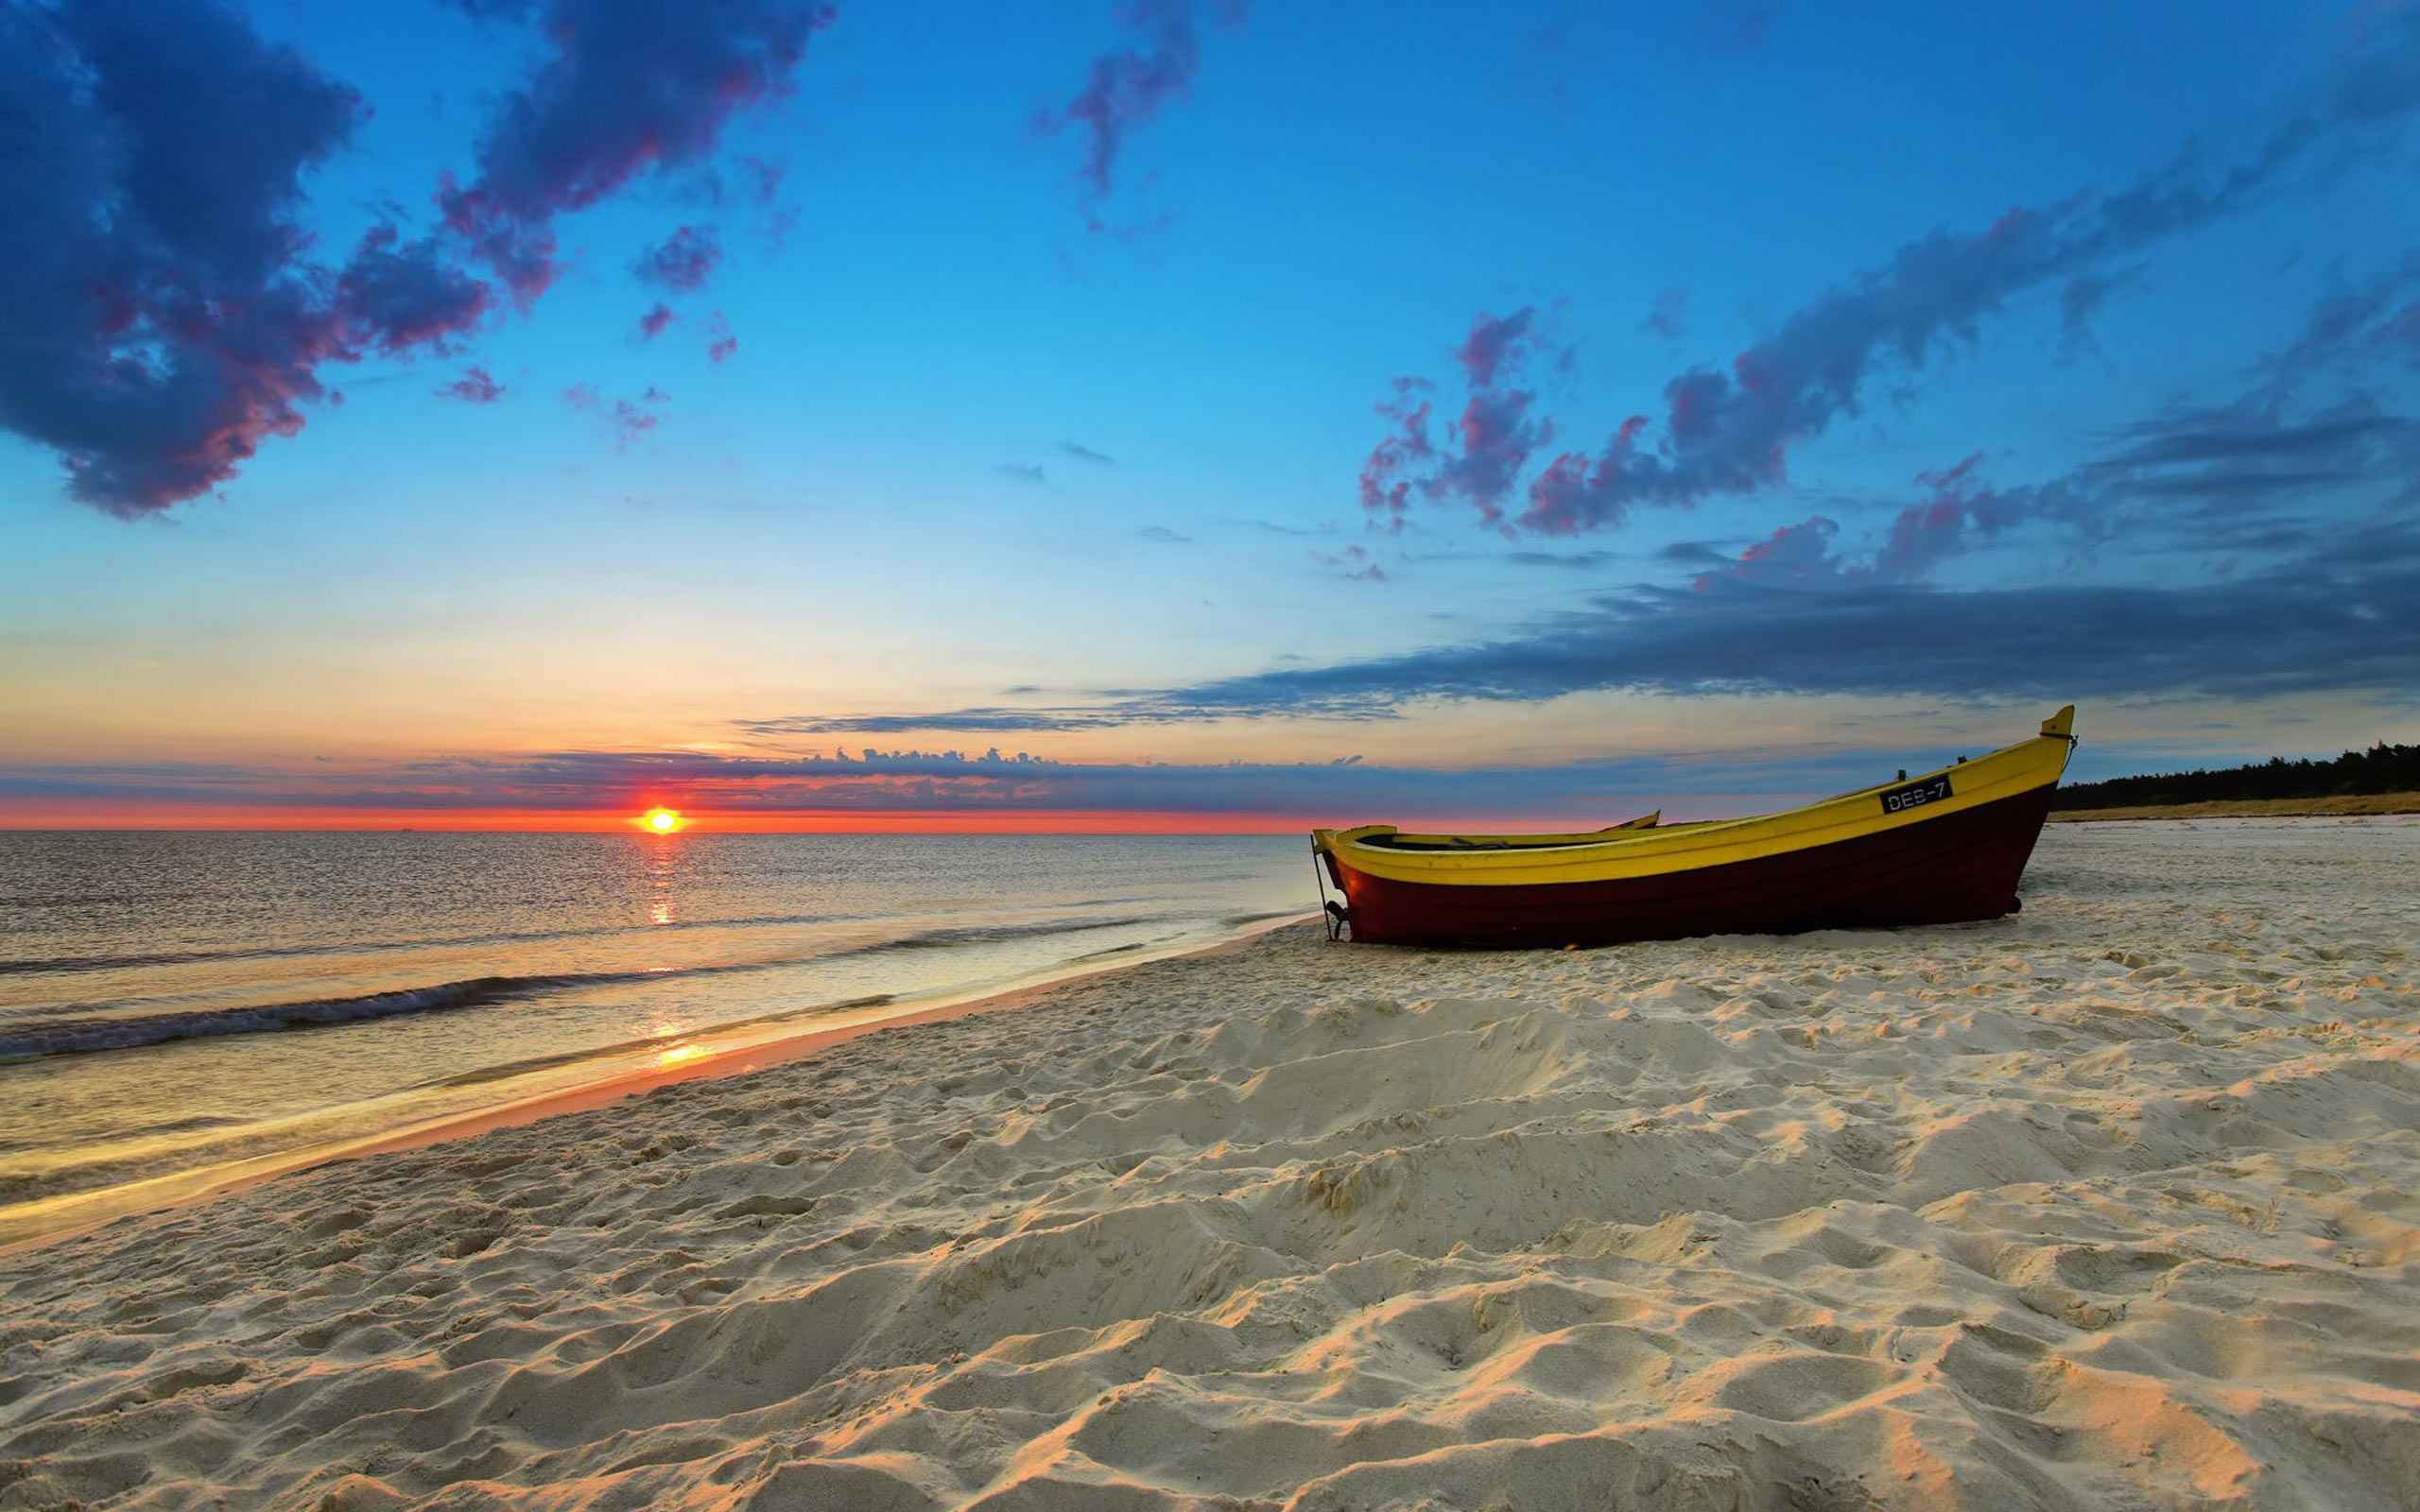 HD Wallpaper Sunset On The Beach Desktop Sand Boats By